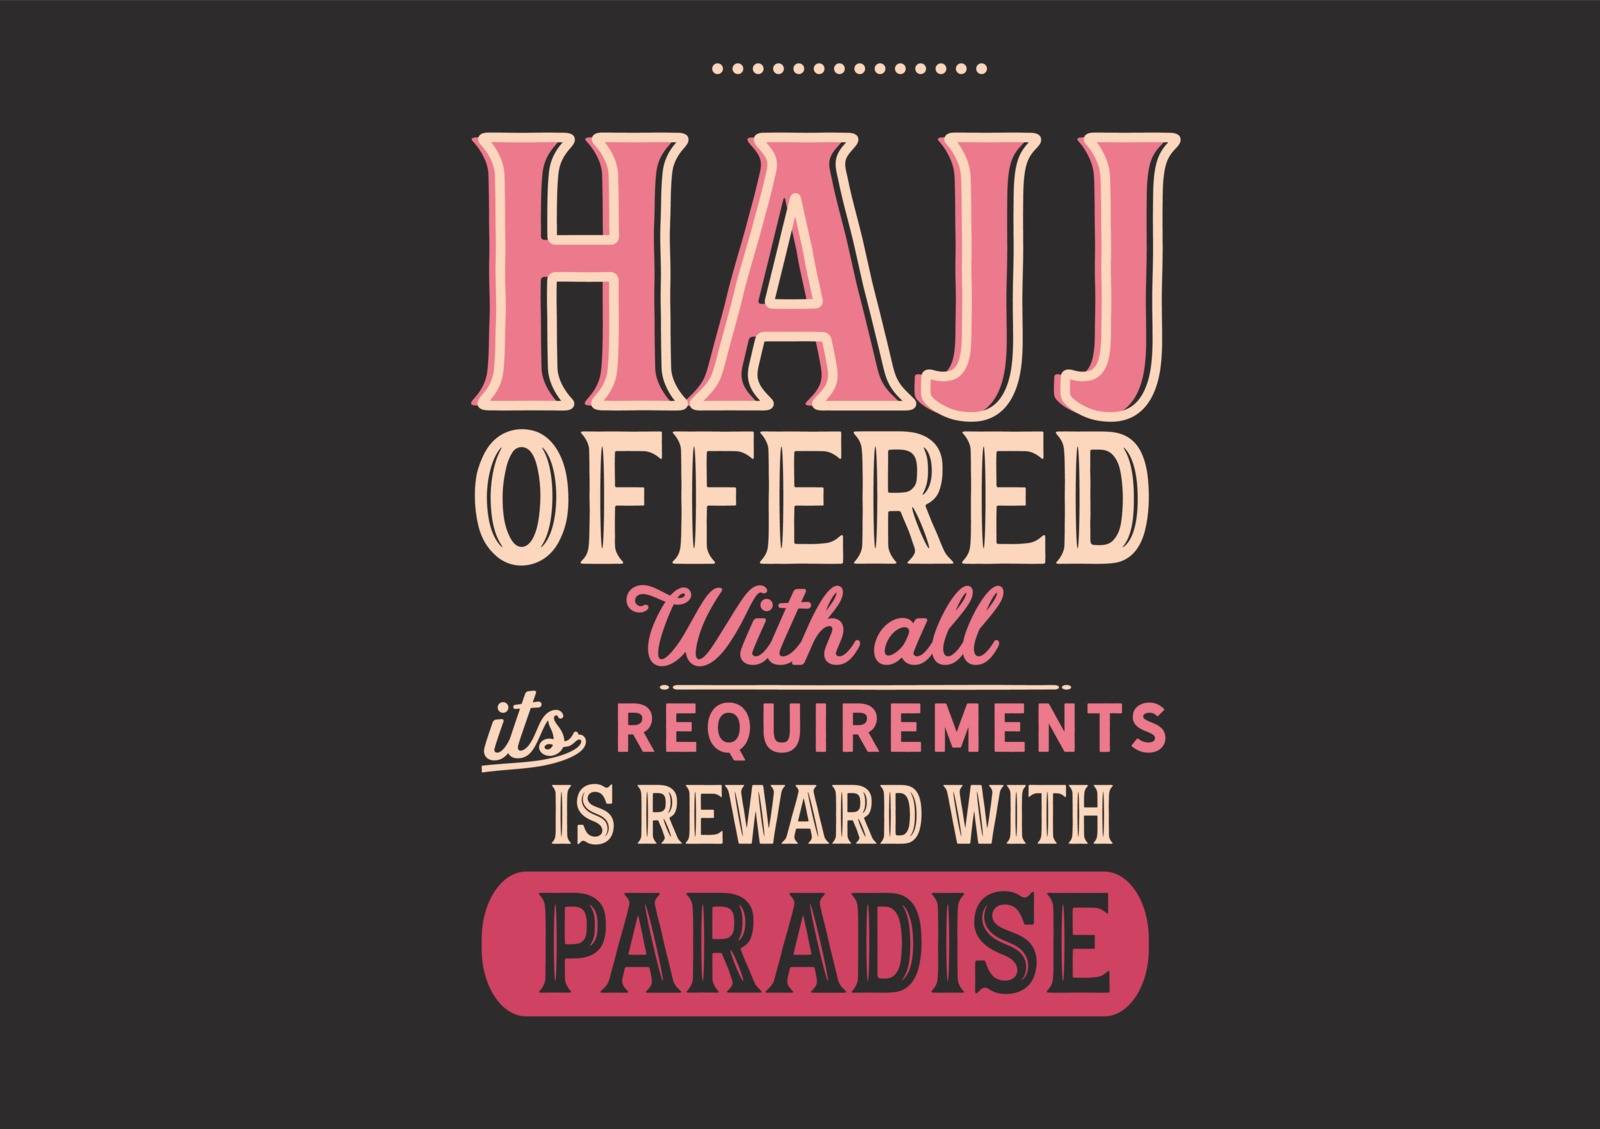 reward with paradise by teguh_jam@yahoo.com